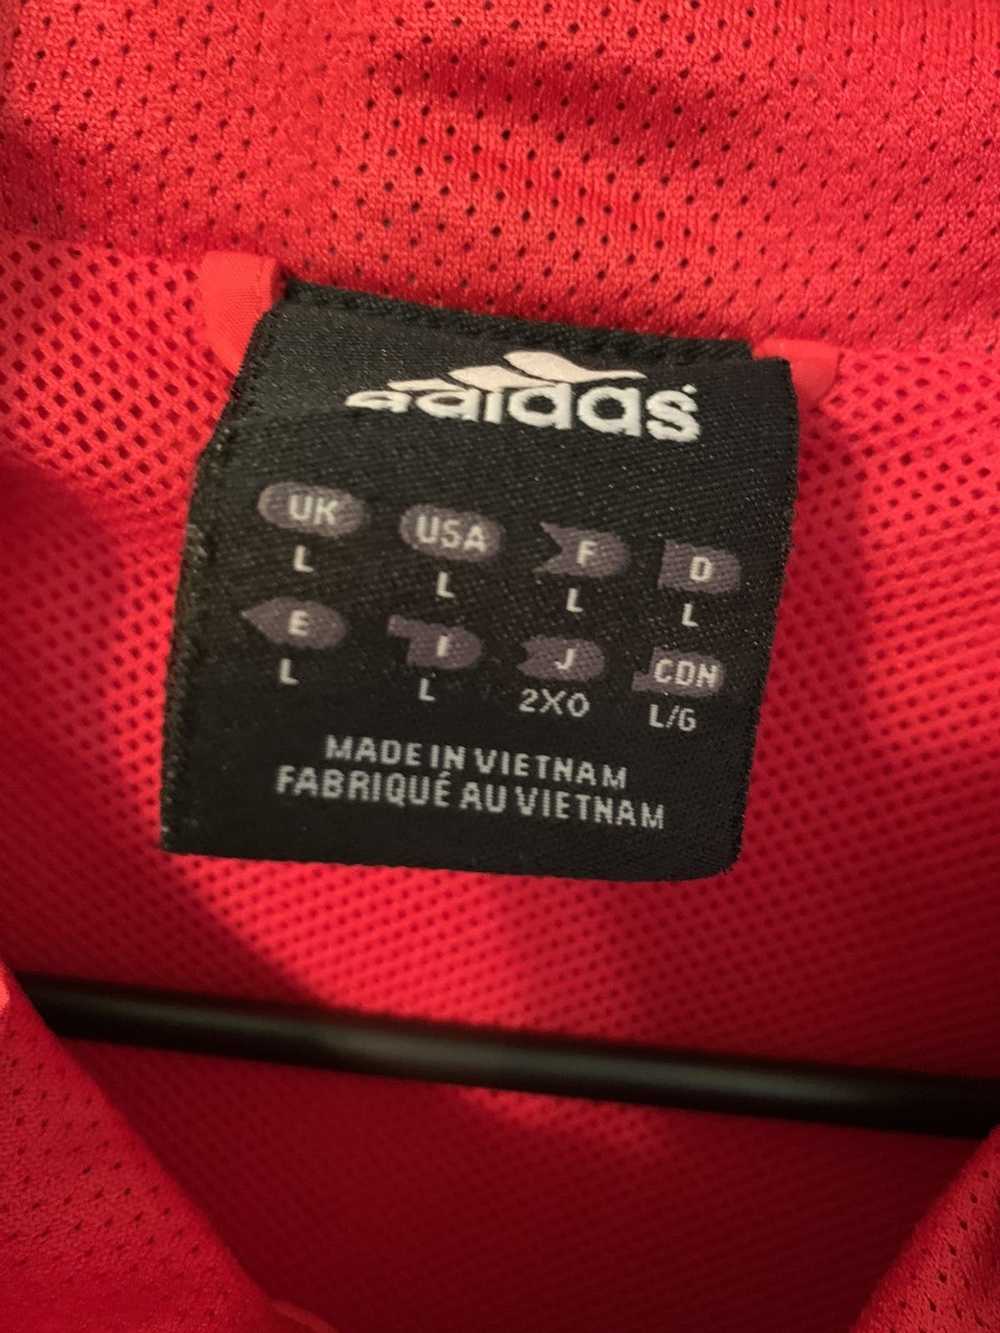 Adidas × Vintage Vintage red adidas zip up jacket - image 3